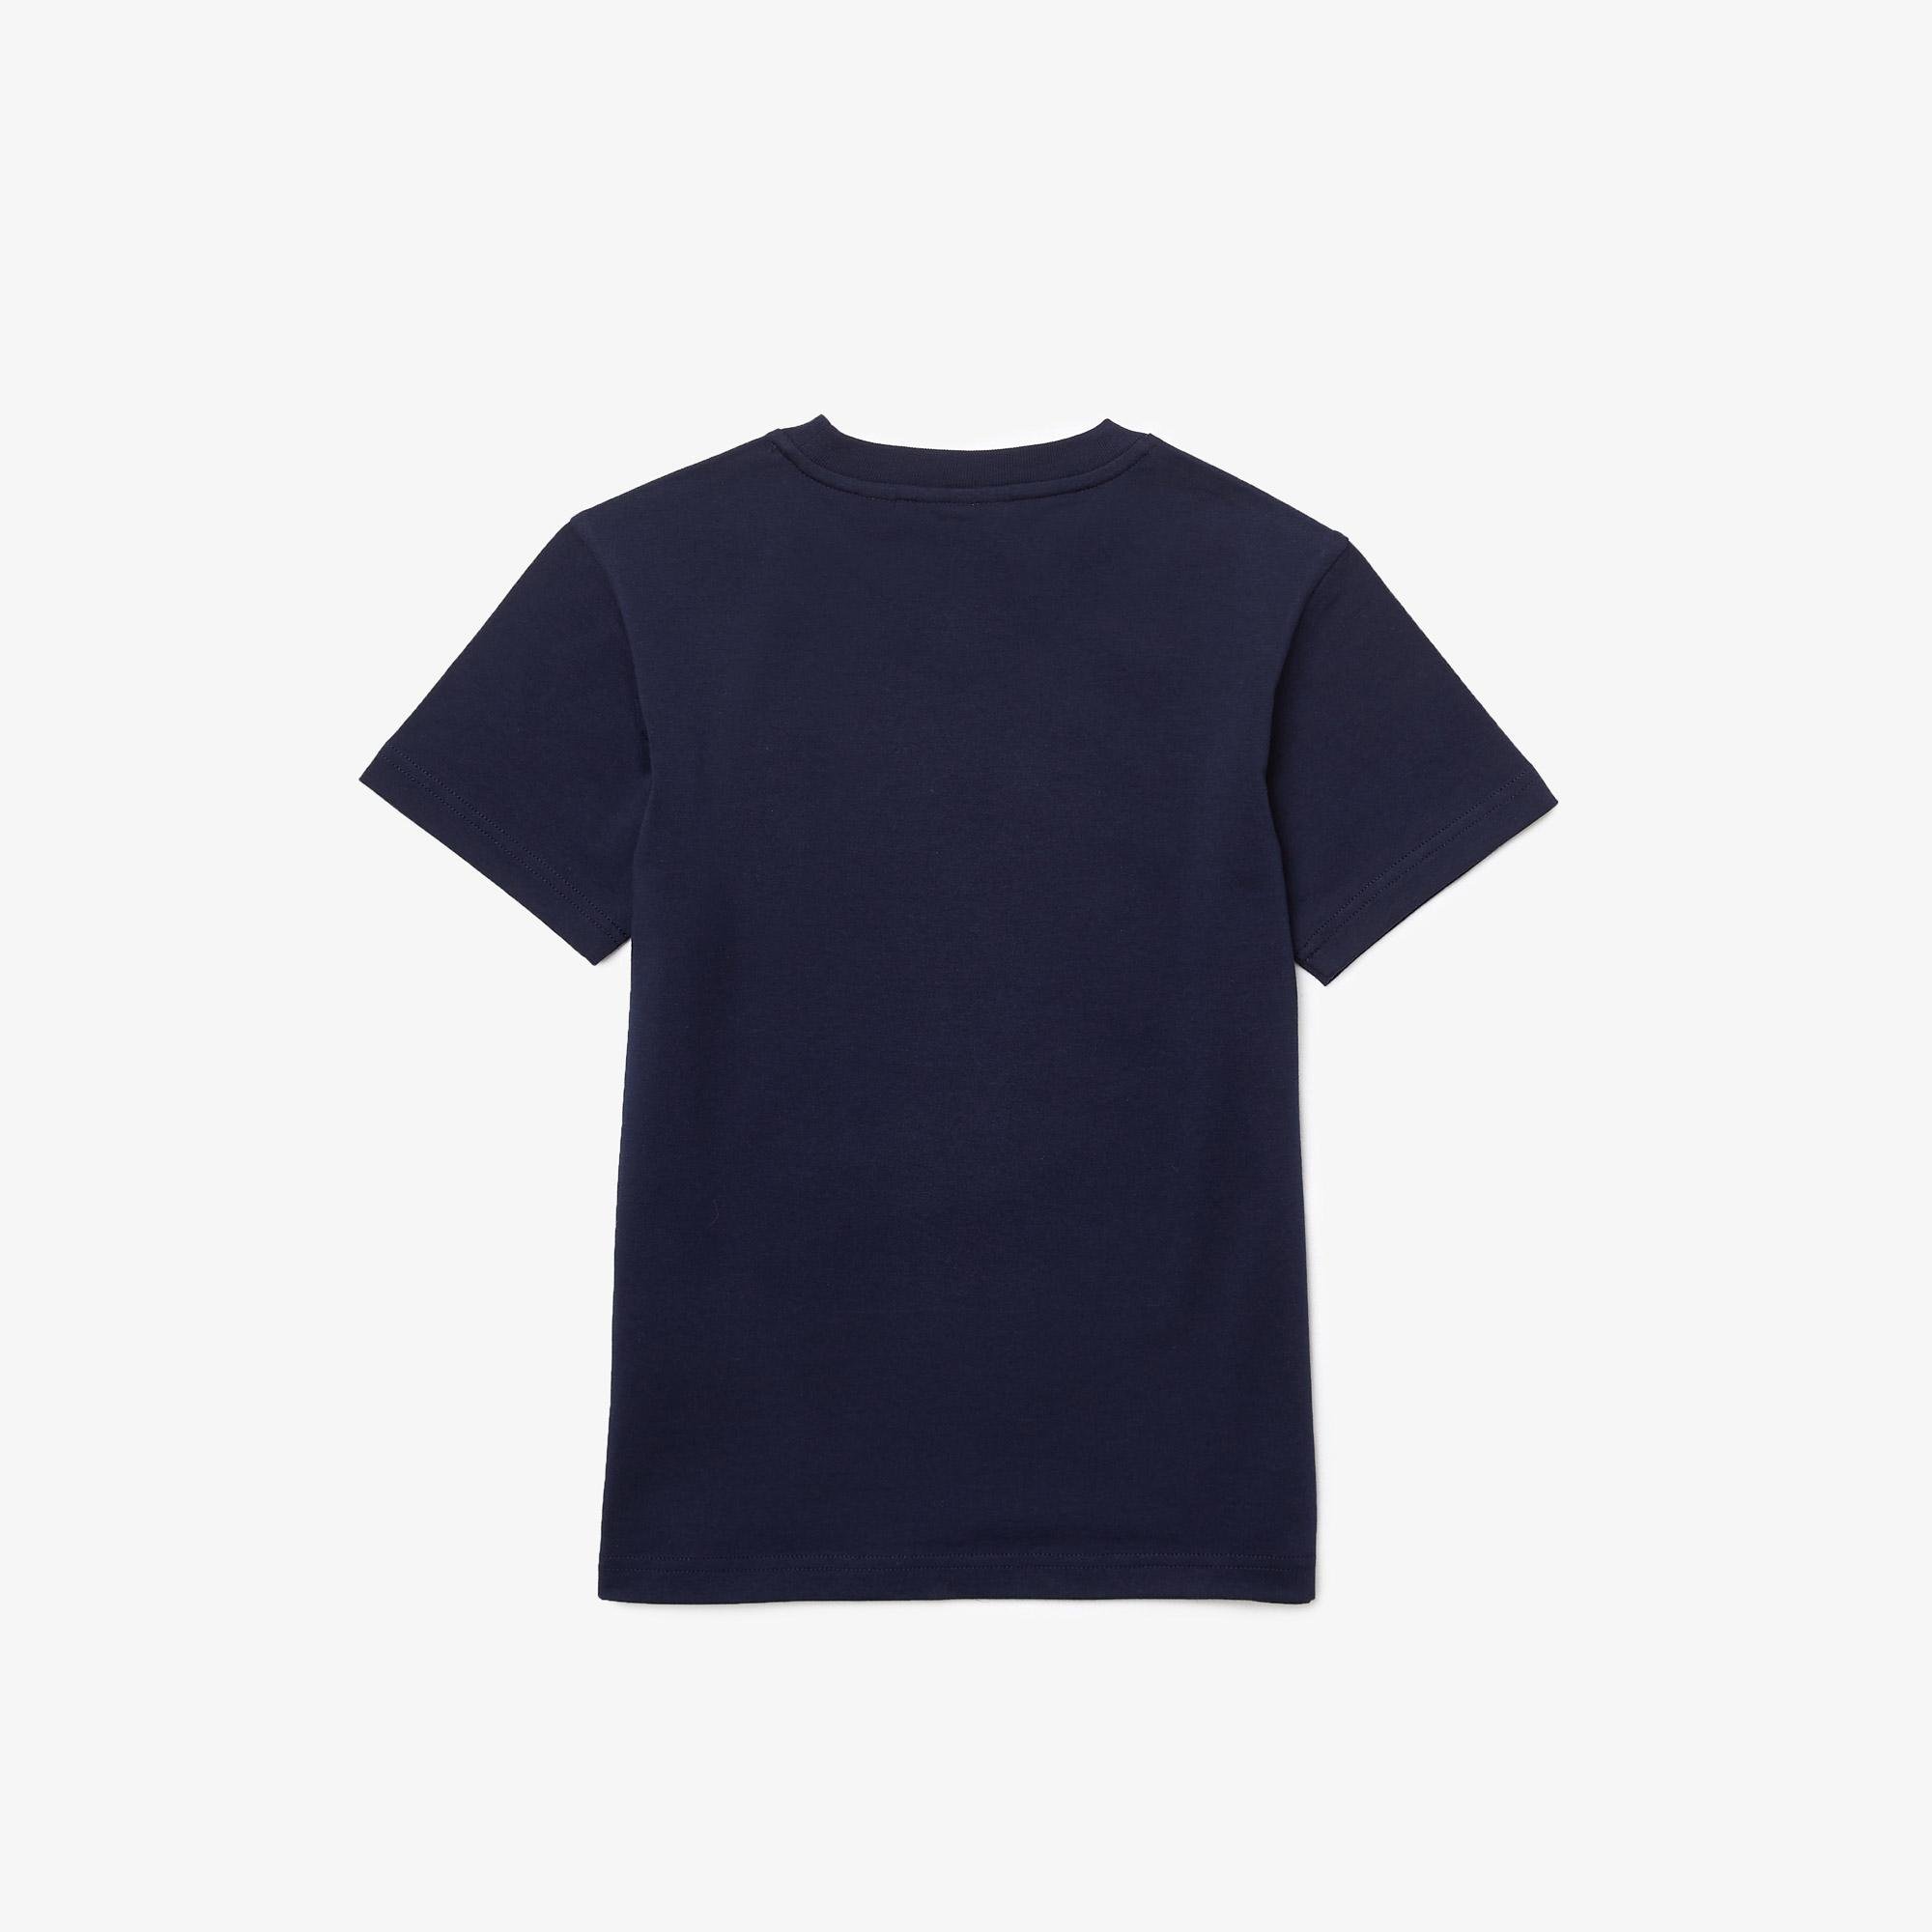 Lacoste Detské bavlnené tričko  s podtlačou a golierom bez výstrihu